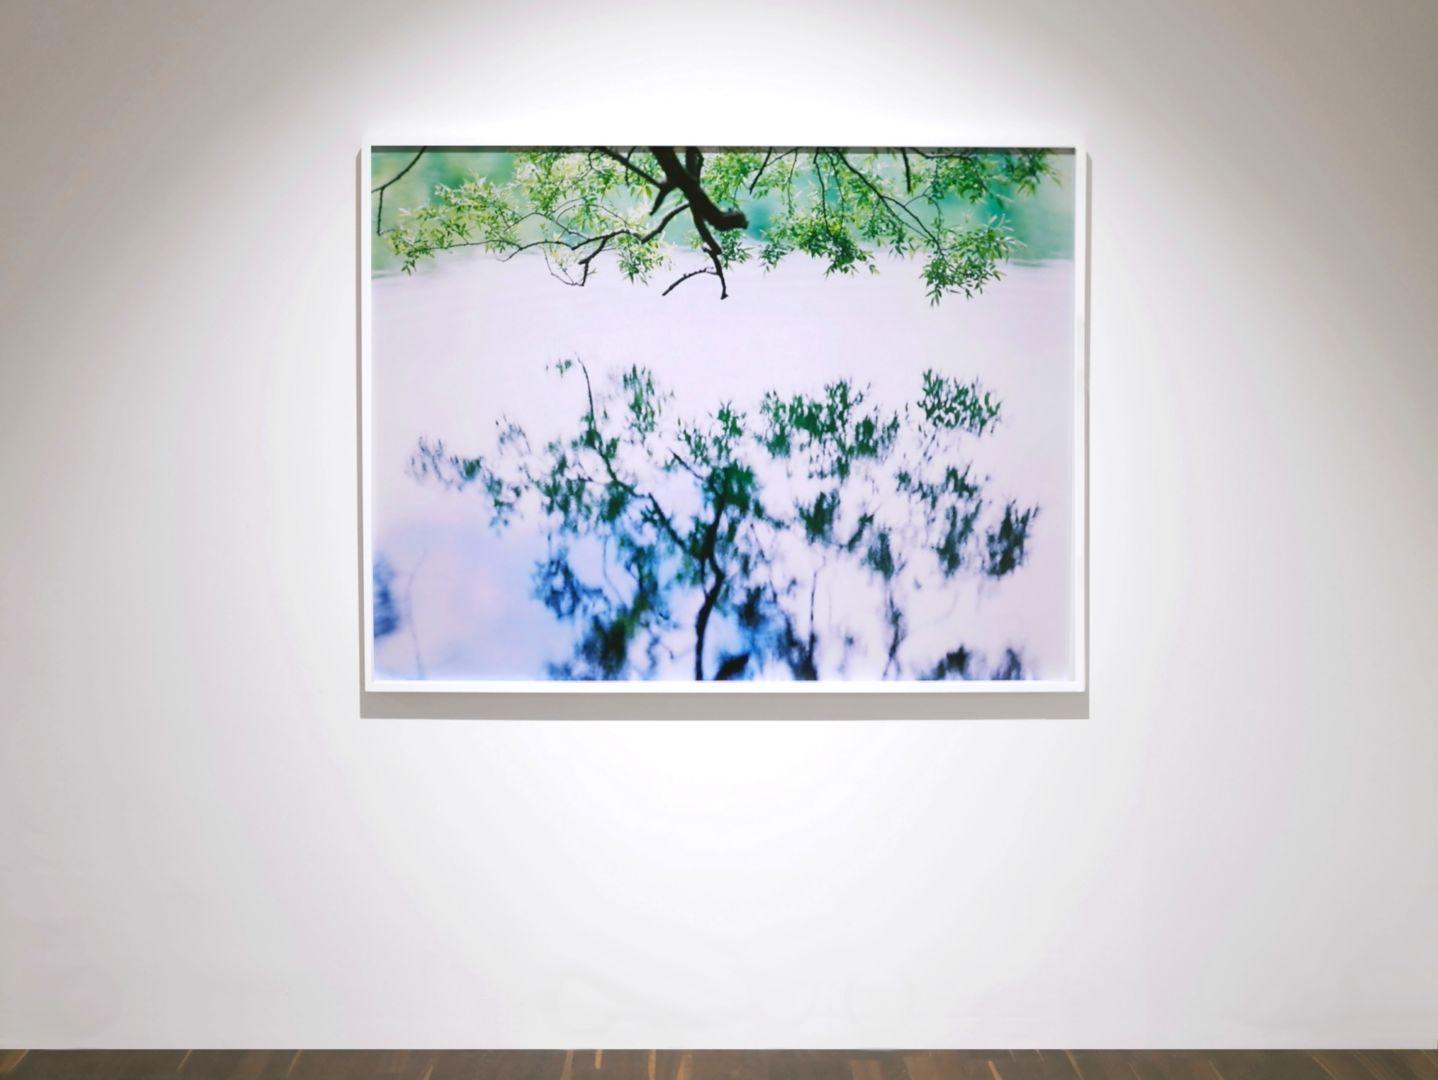 Water Mirror 17, WM-758 – Risaku Suzuki, Nature, Tree, Japanese, Reflection 5